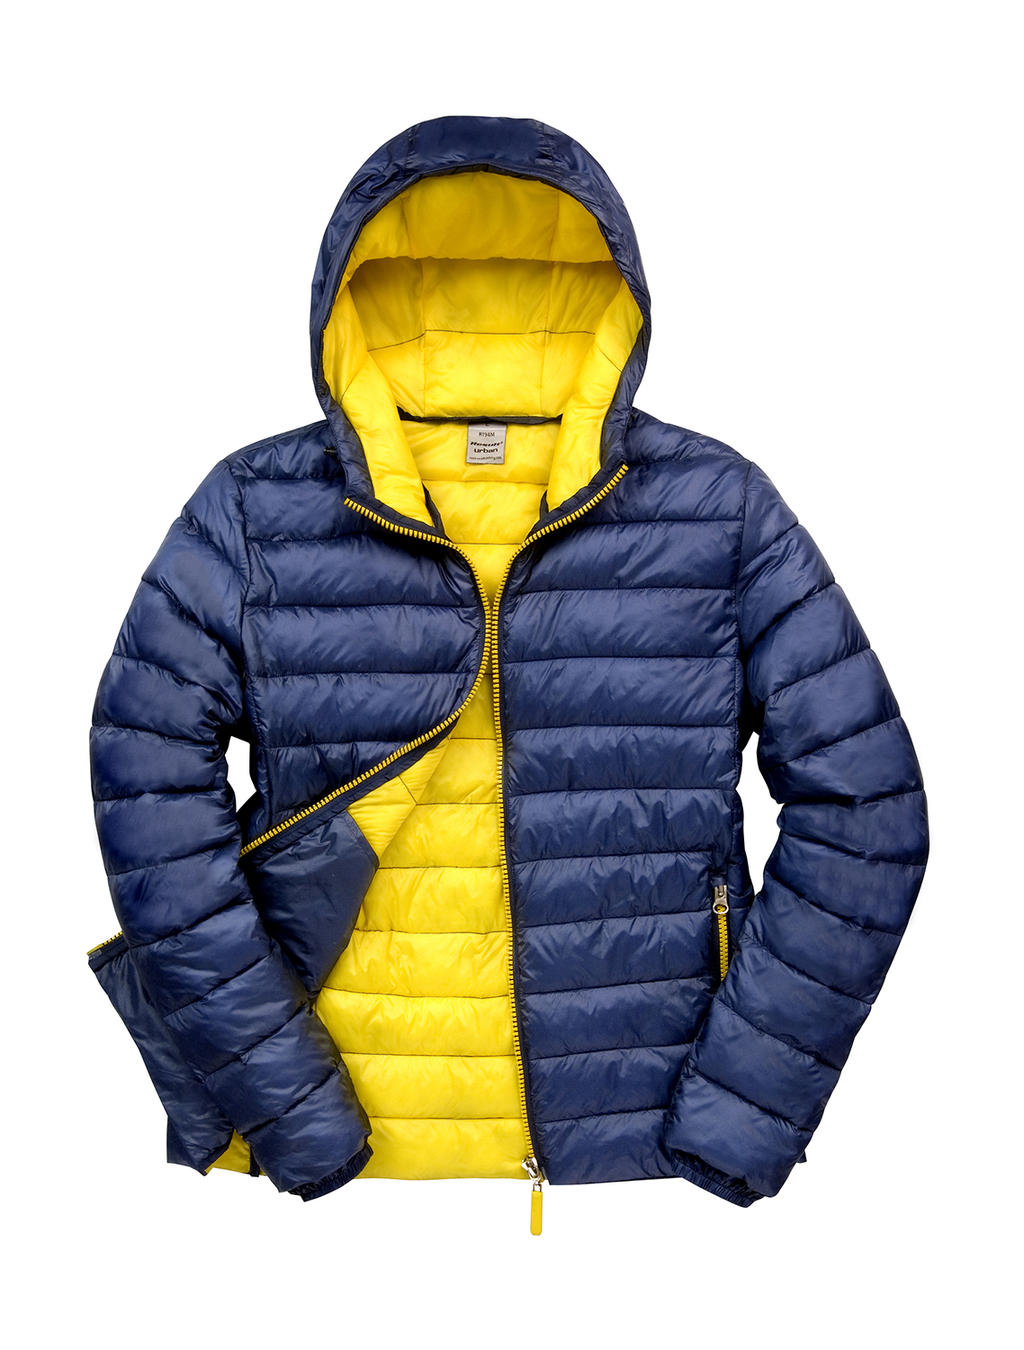 Pánská Snow Bird bunda s kapucí Velikost: S, Barva: Navy/Yellow